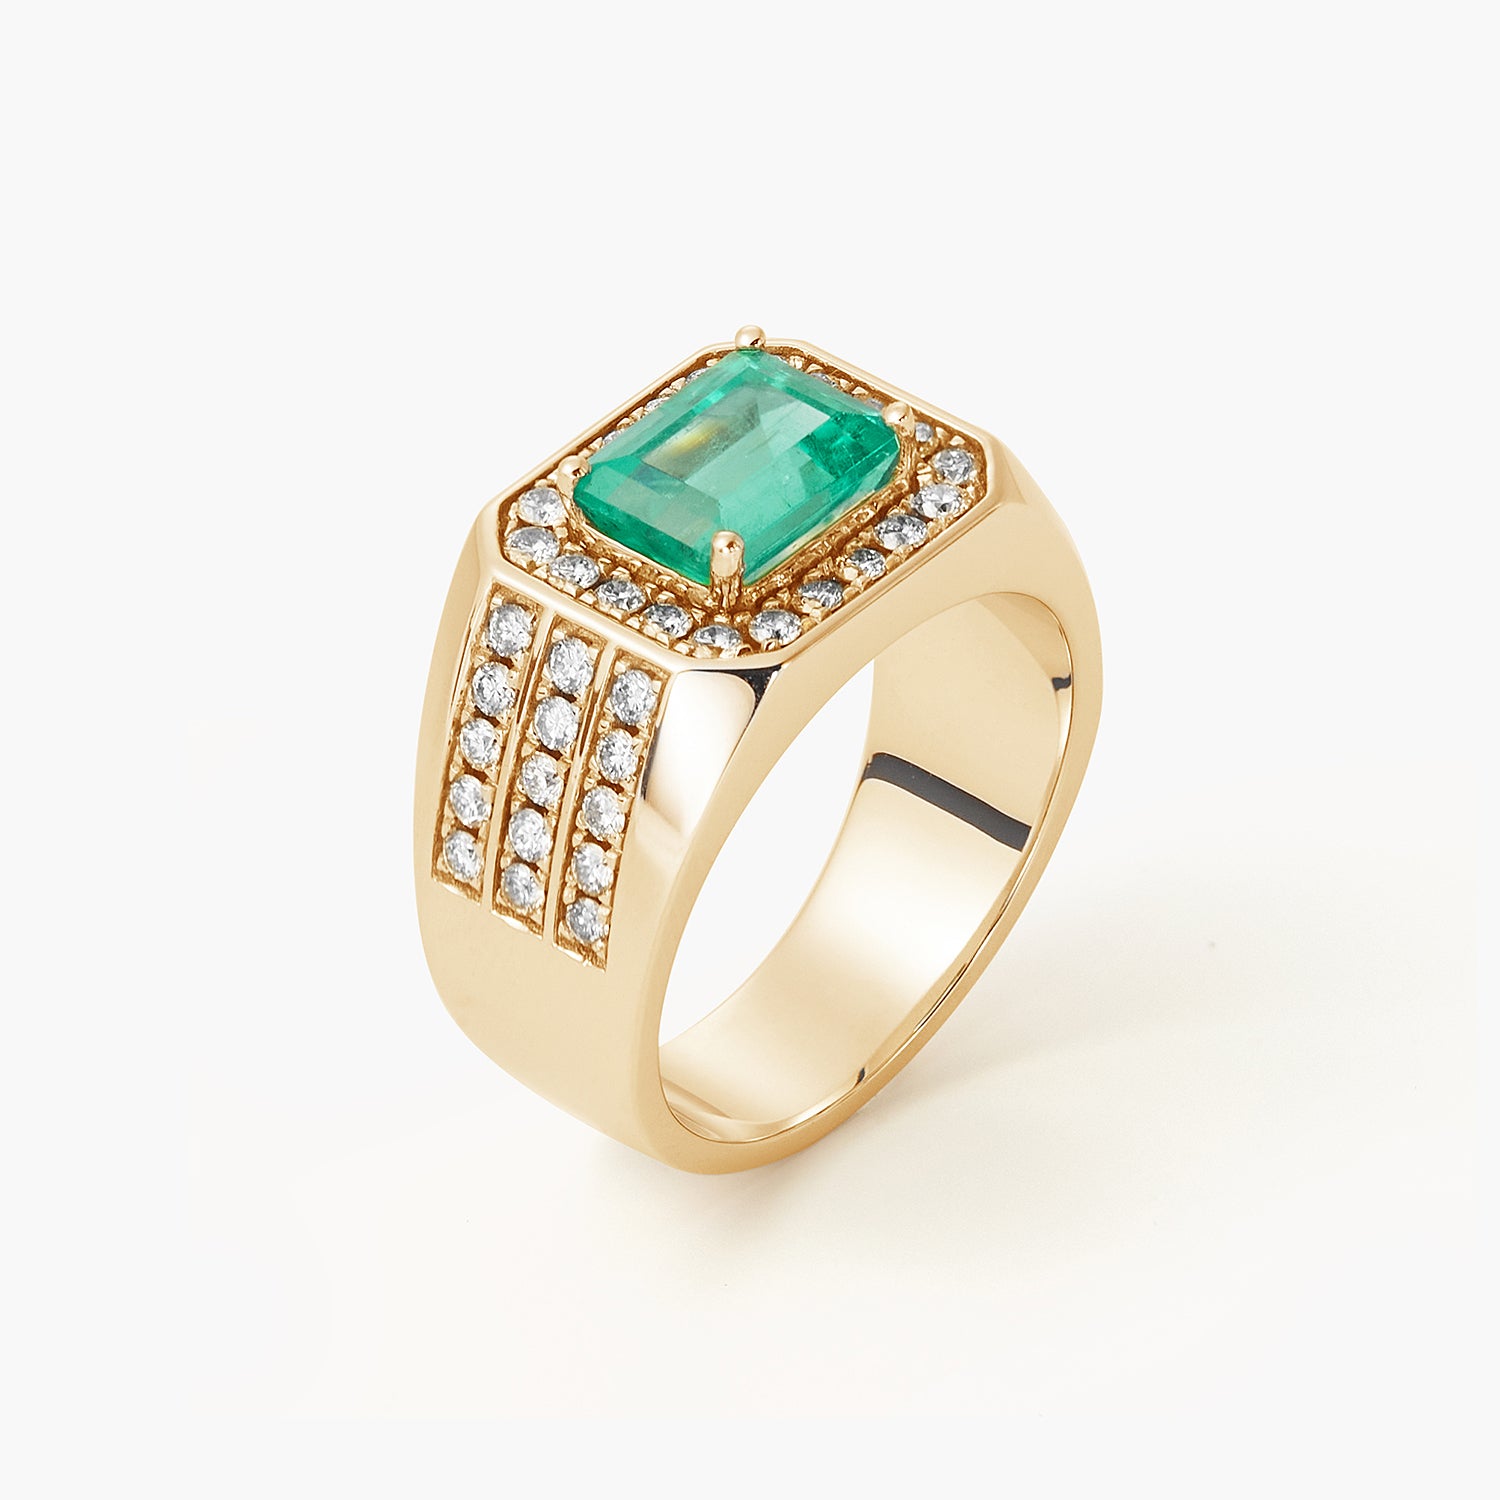 Sunshine Quest emerald Ring